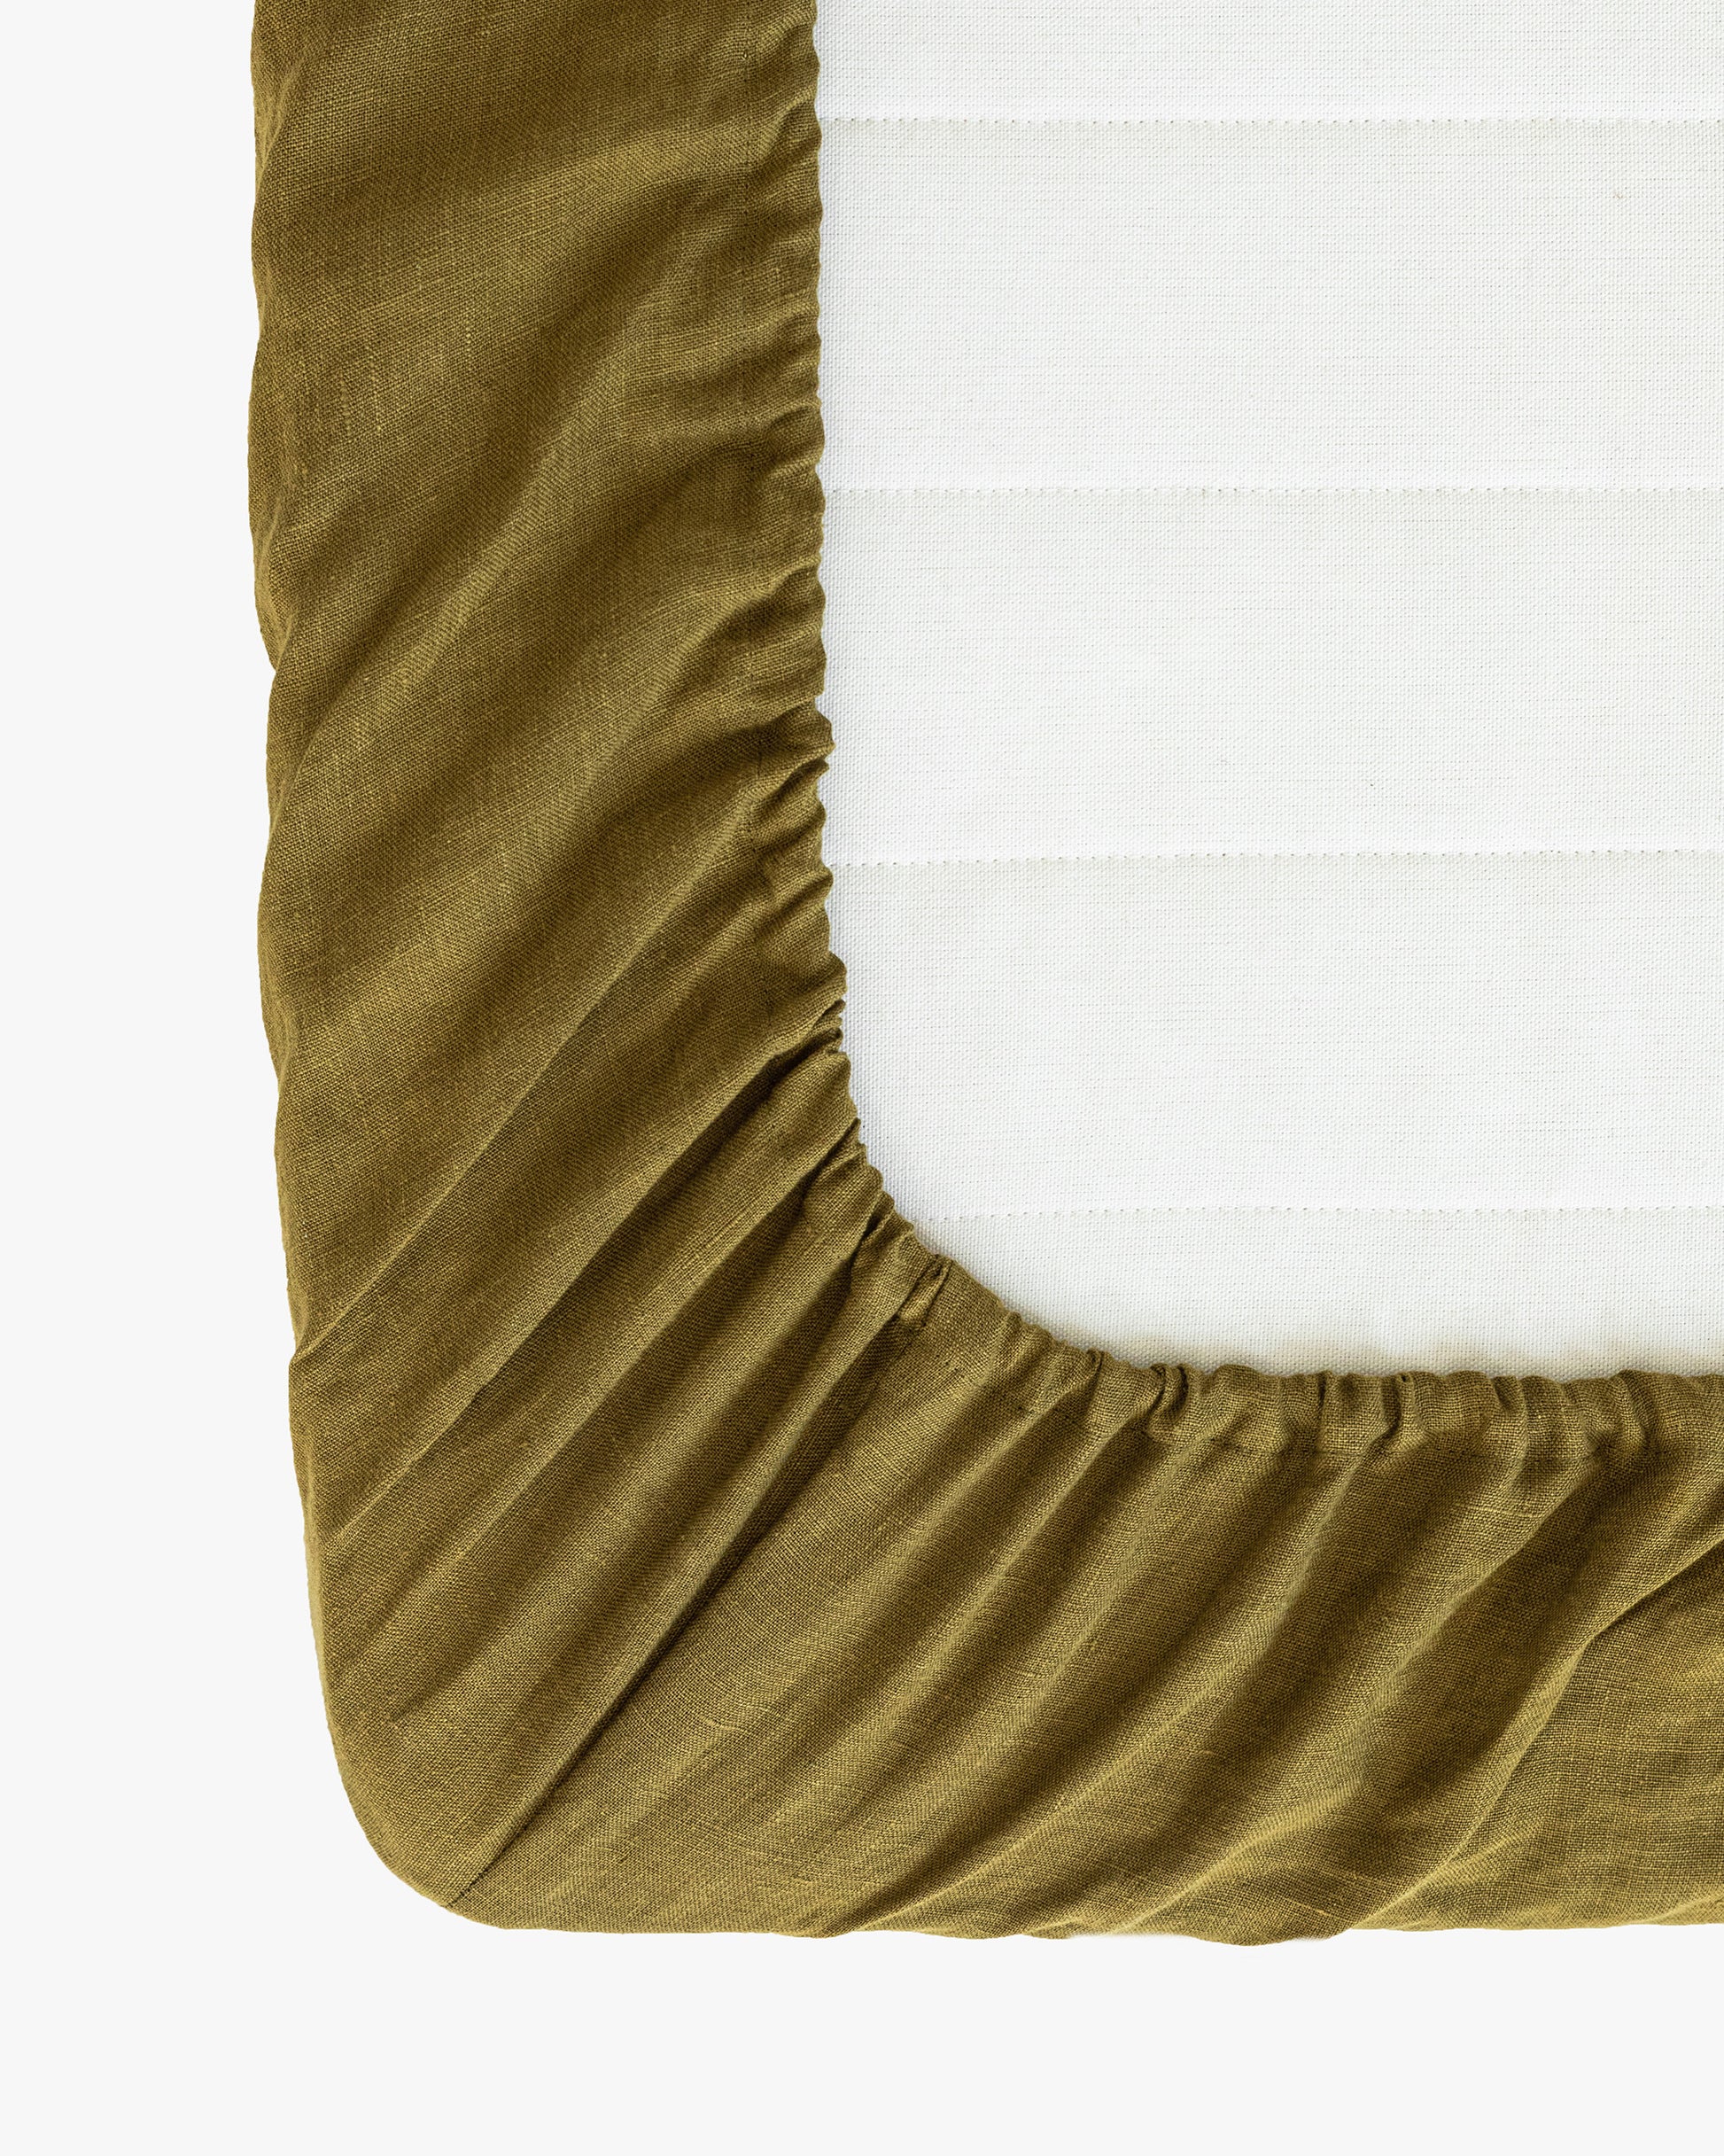 Olive green linen fitted sheet - MagicLinen